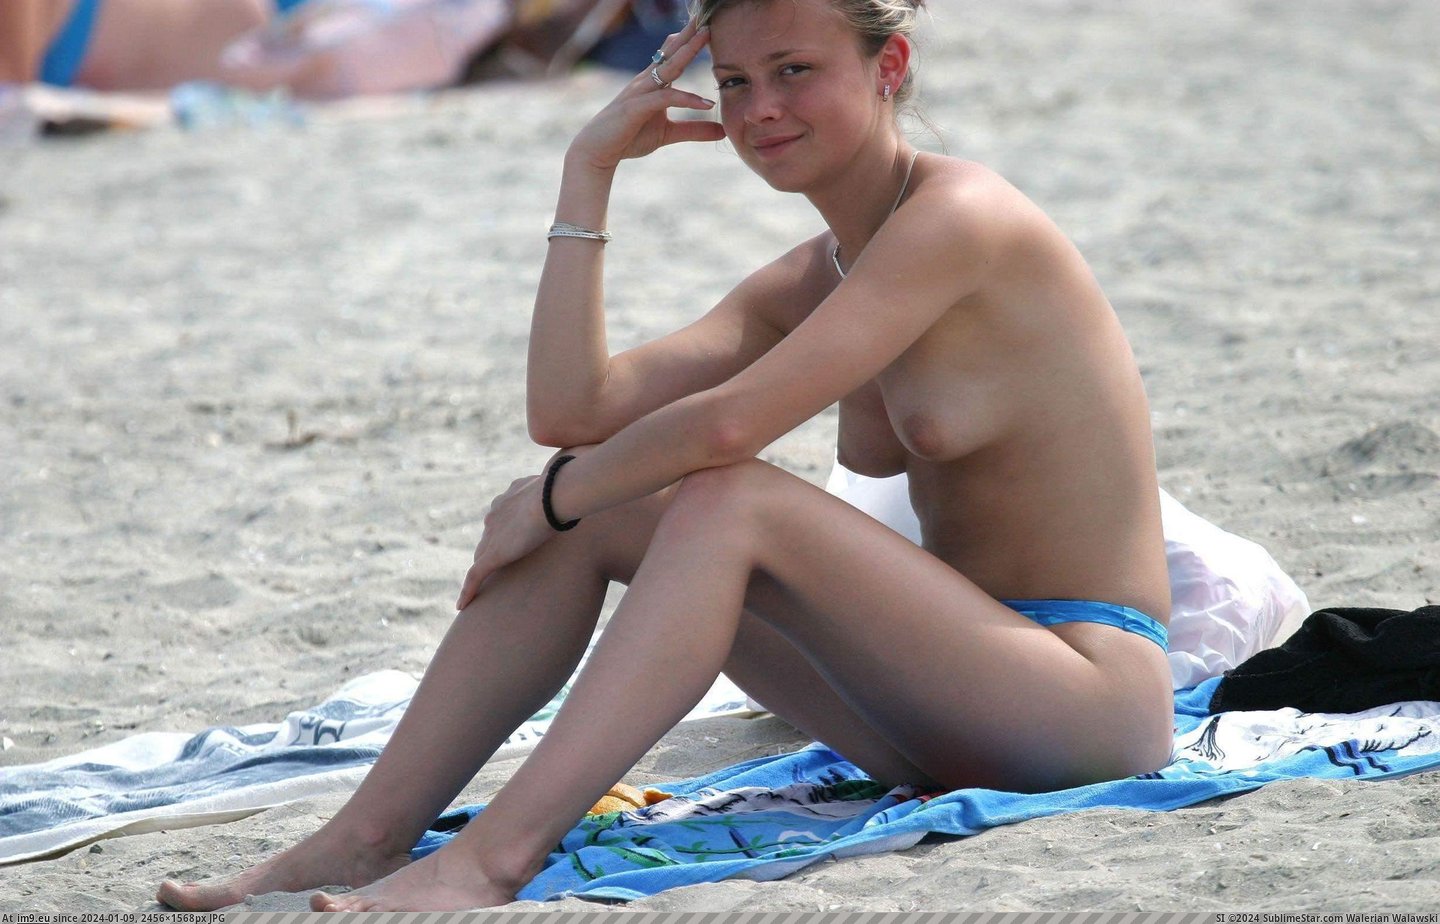 #Teens  #Topless best-of-topless-teens-131-3 Pic. (Bild von album Strictly Topless))